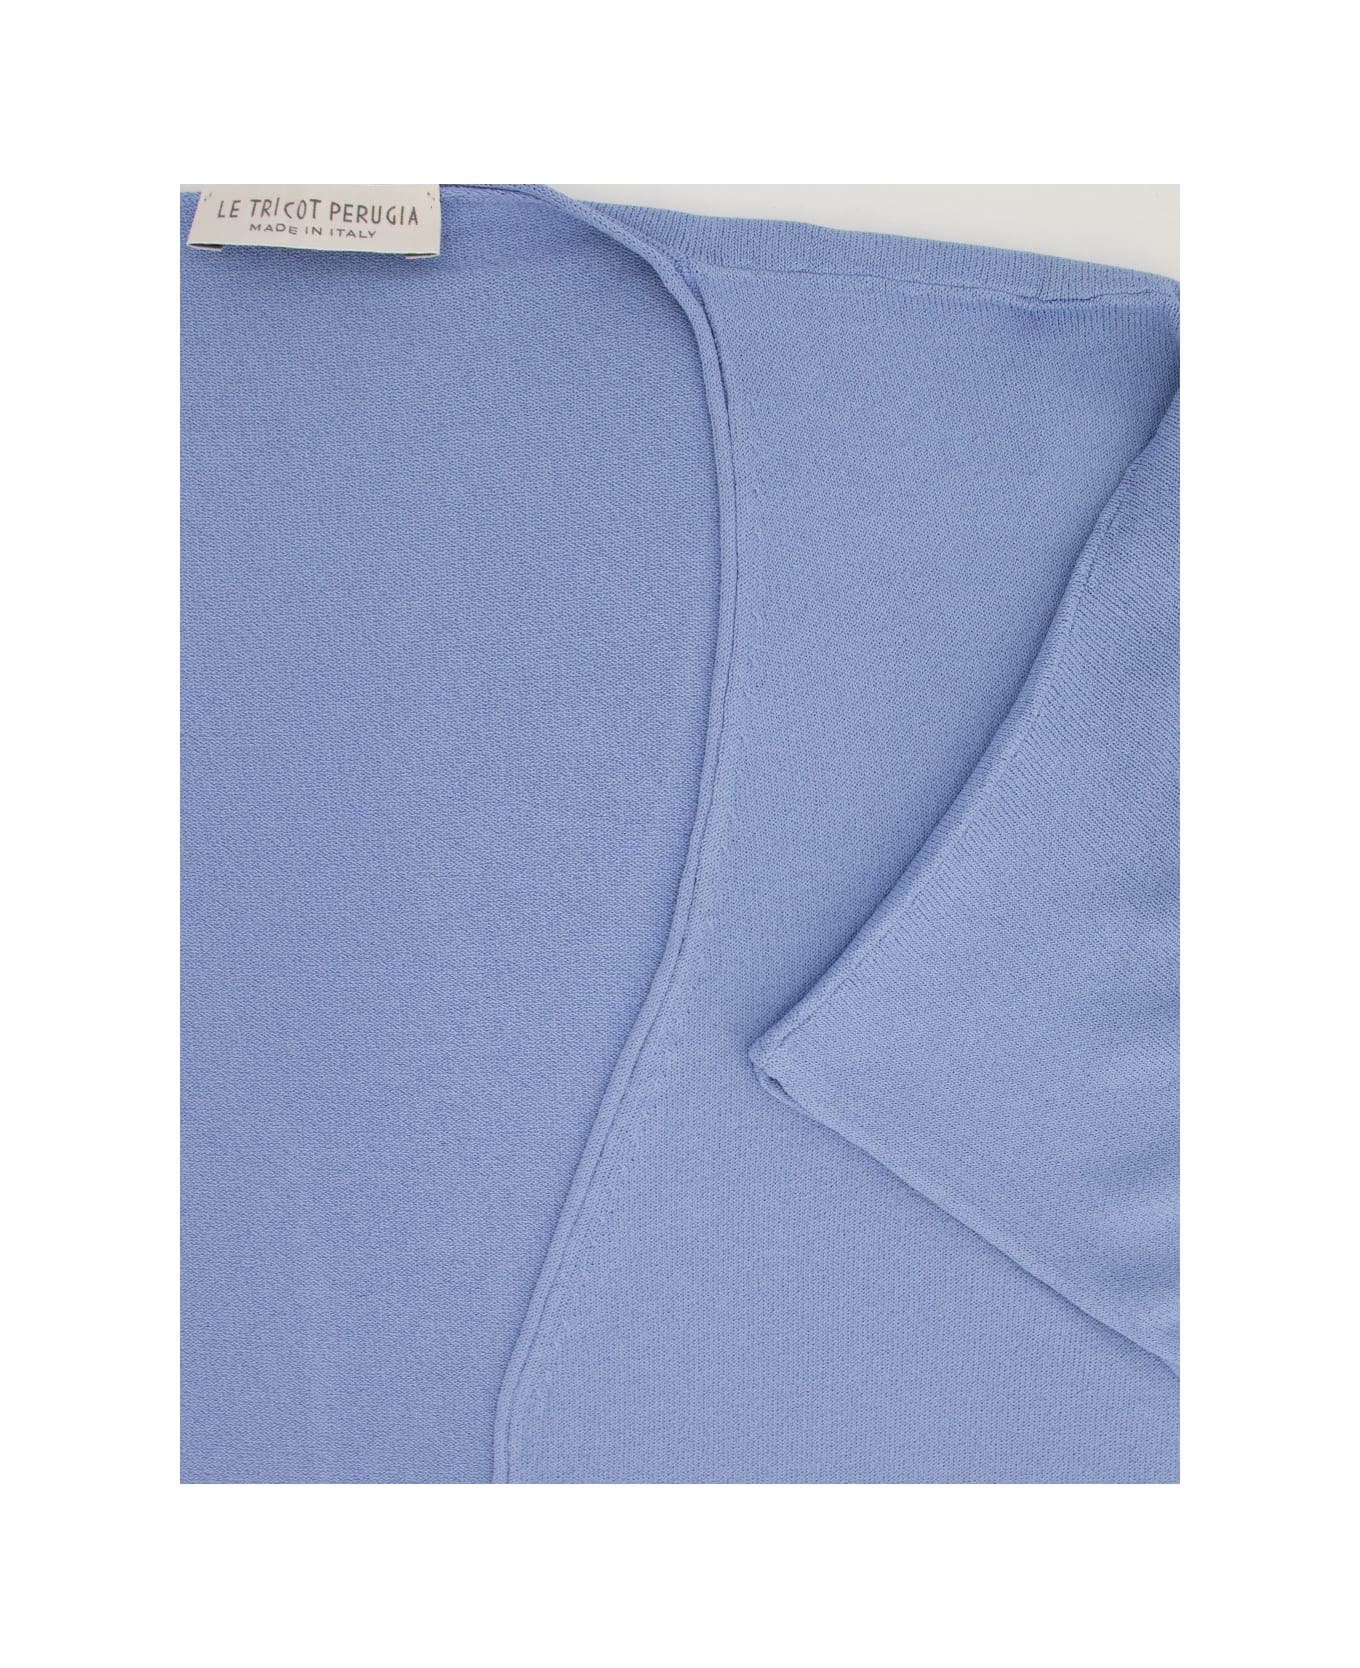 Le Tricot Perugia Cardigan - BLUE ニットウェア